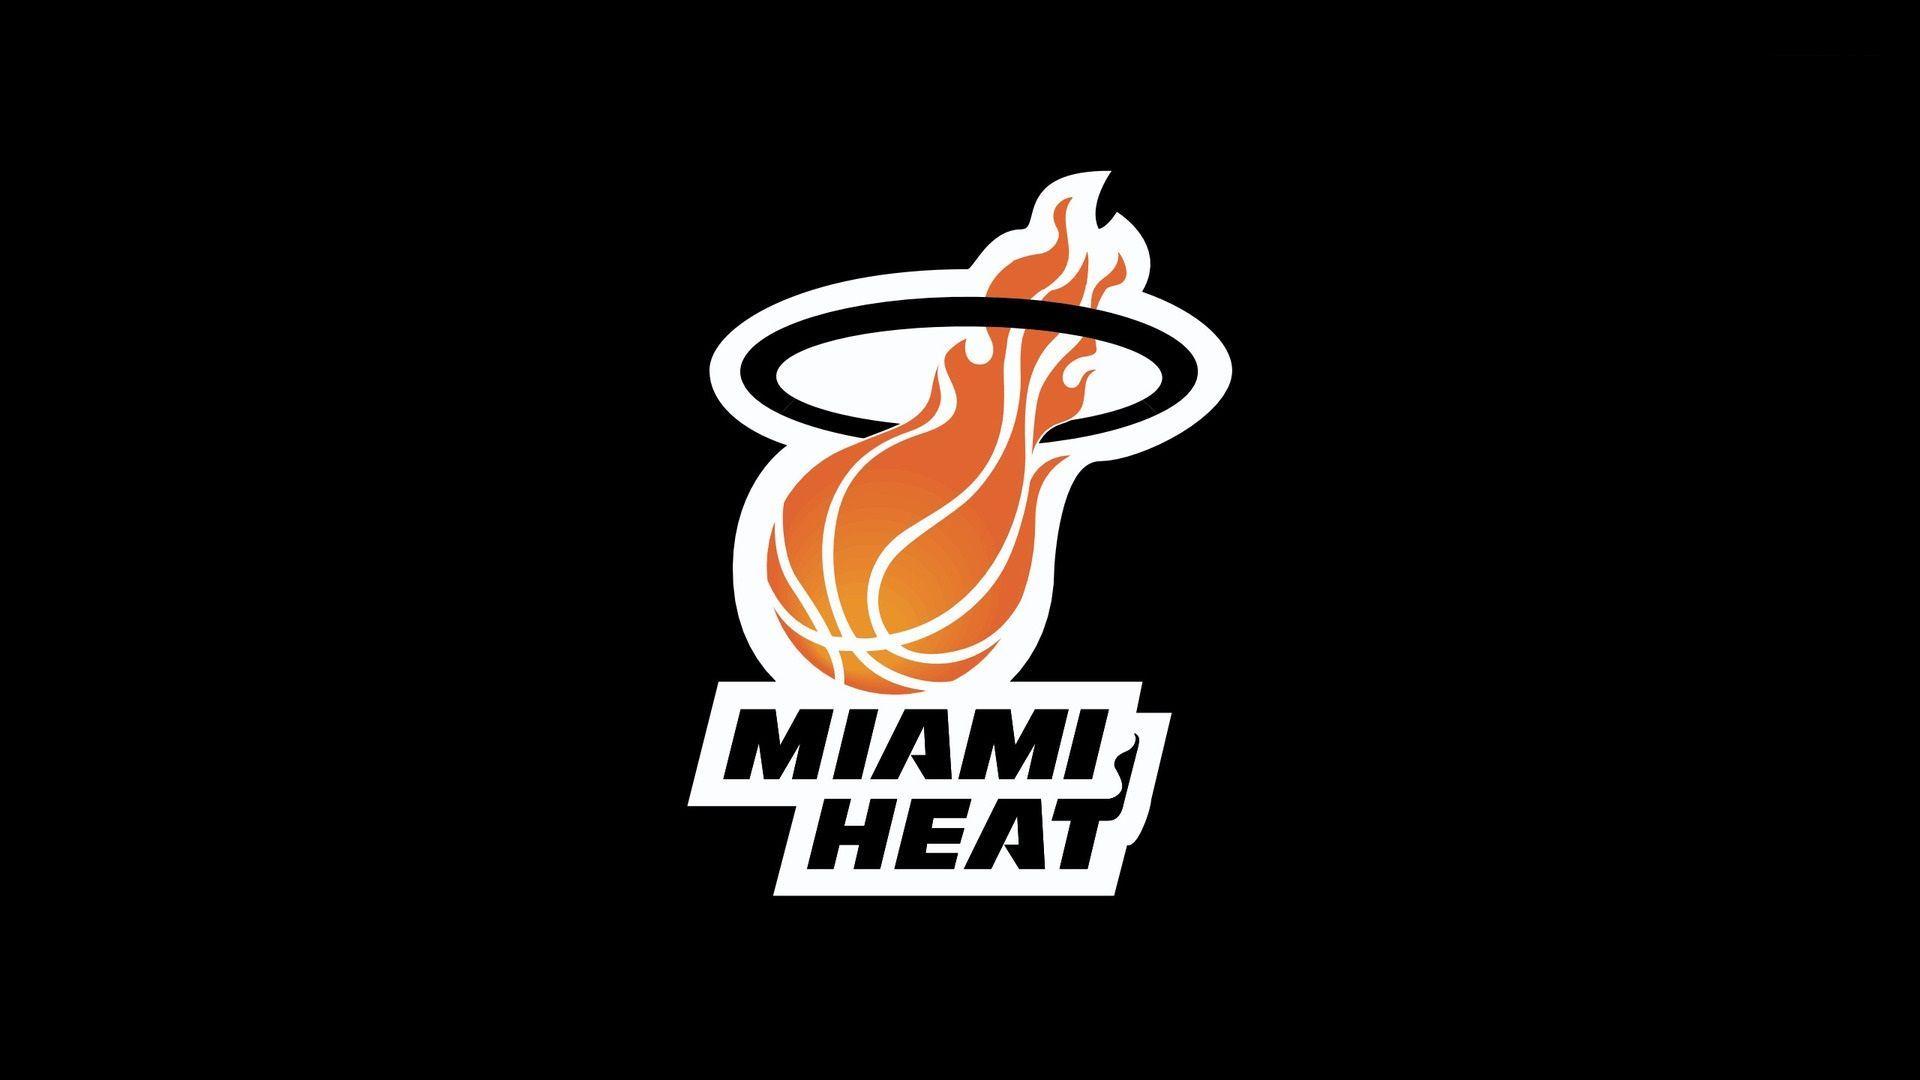 Miami heat wallpaper free download